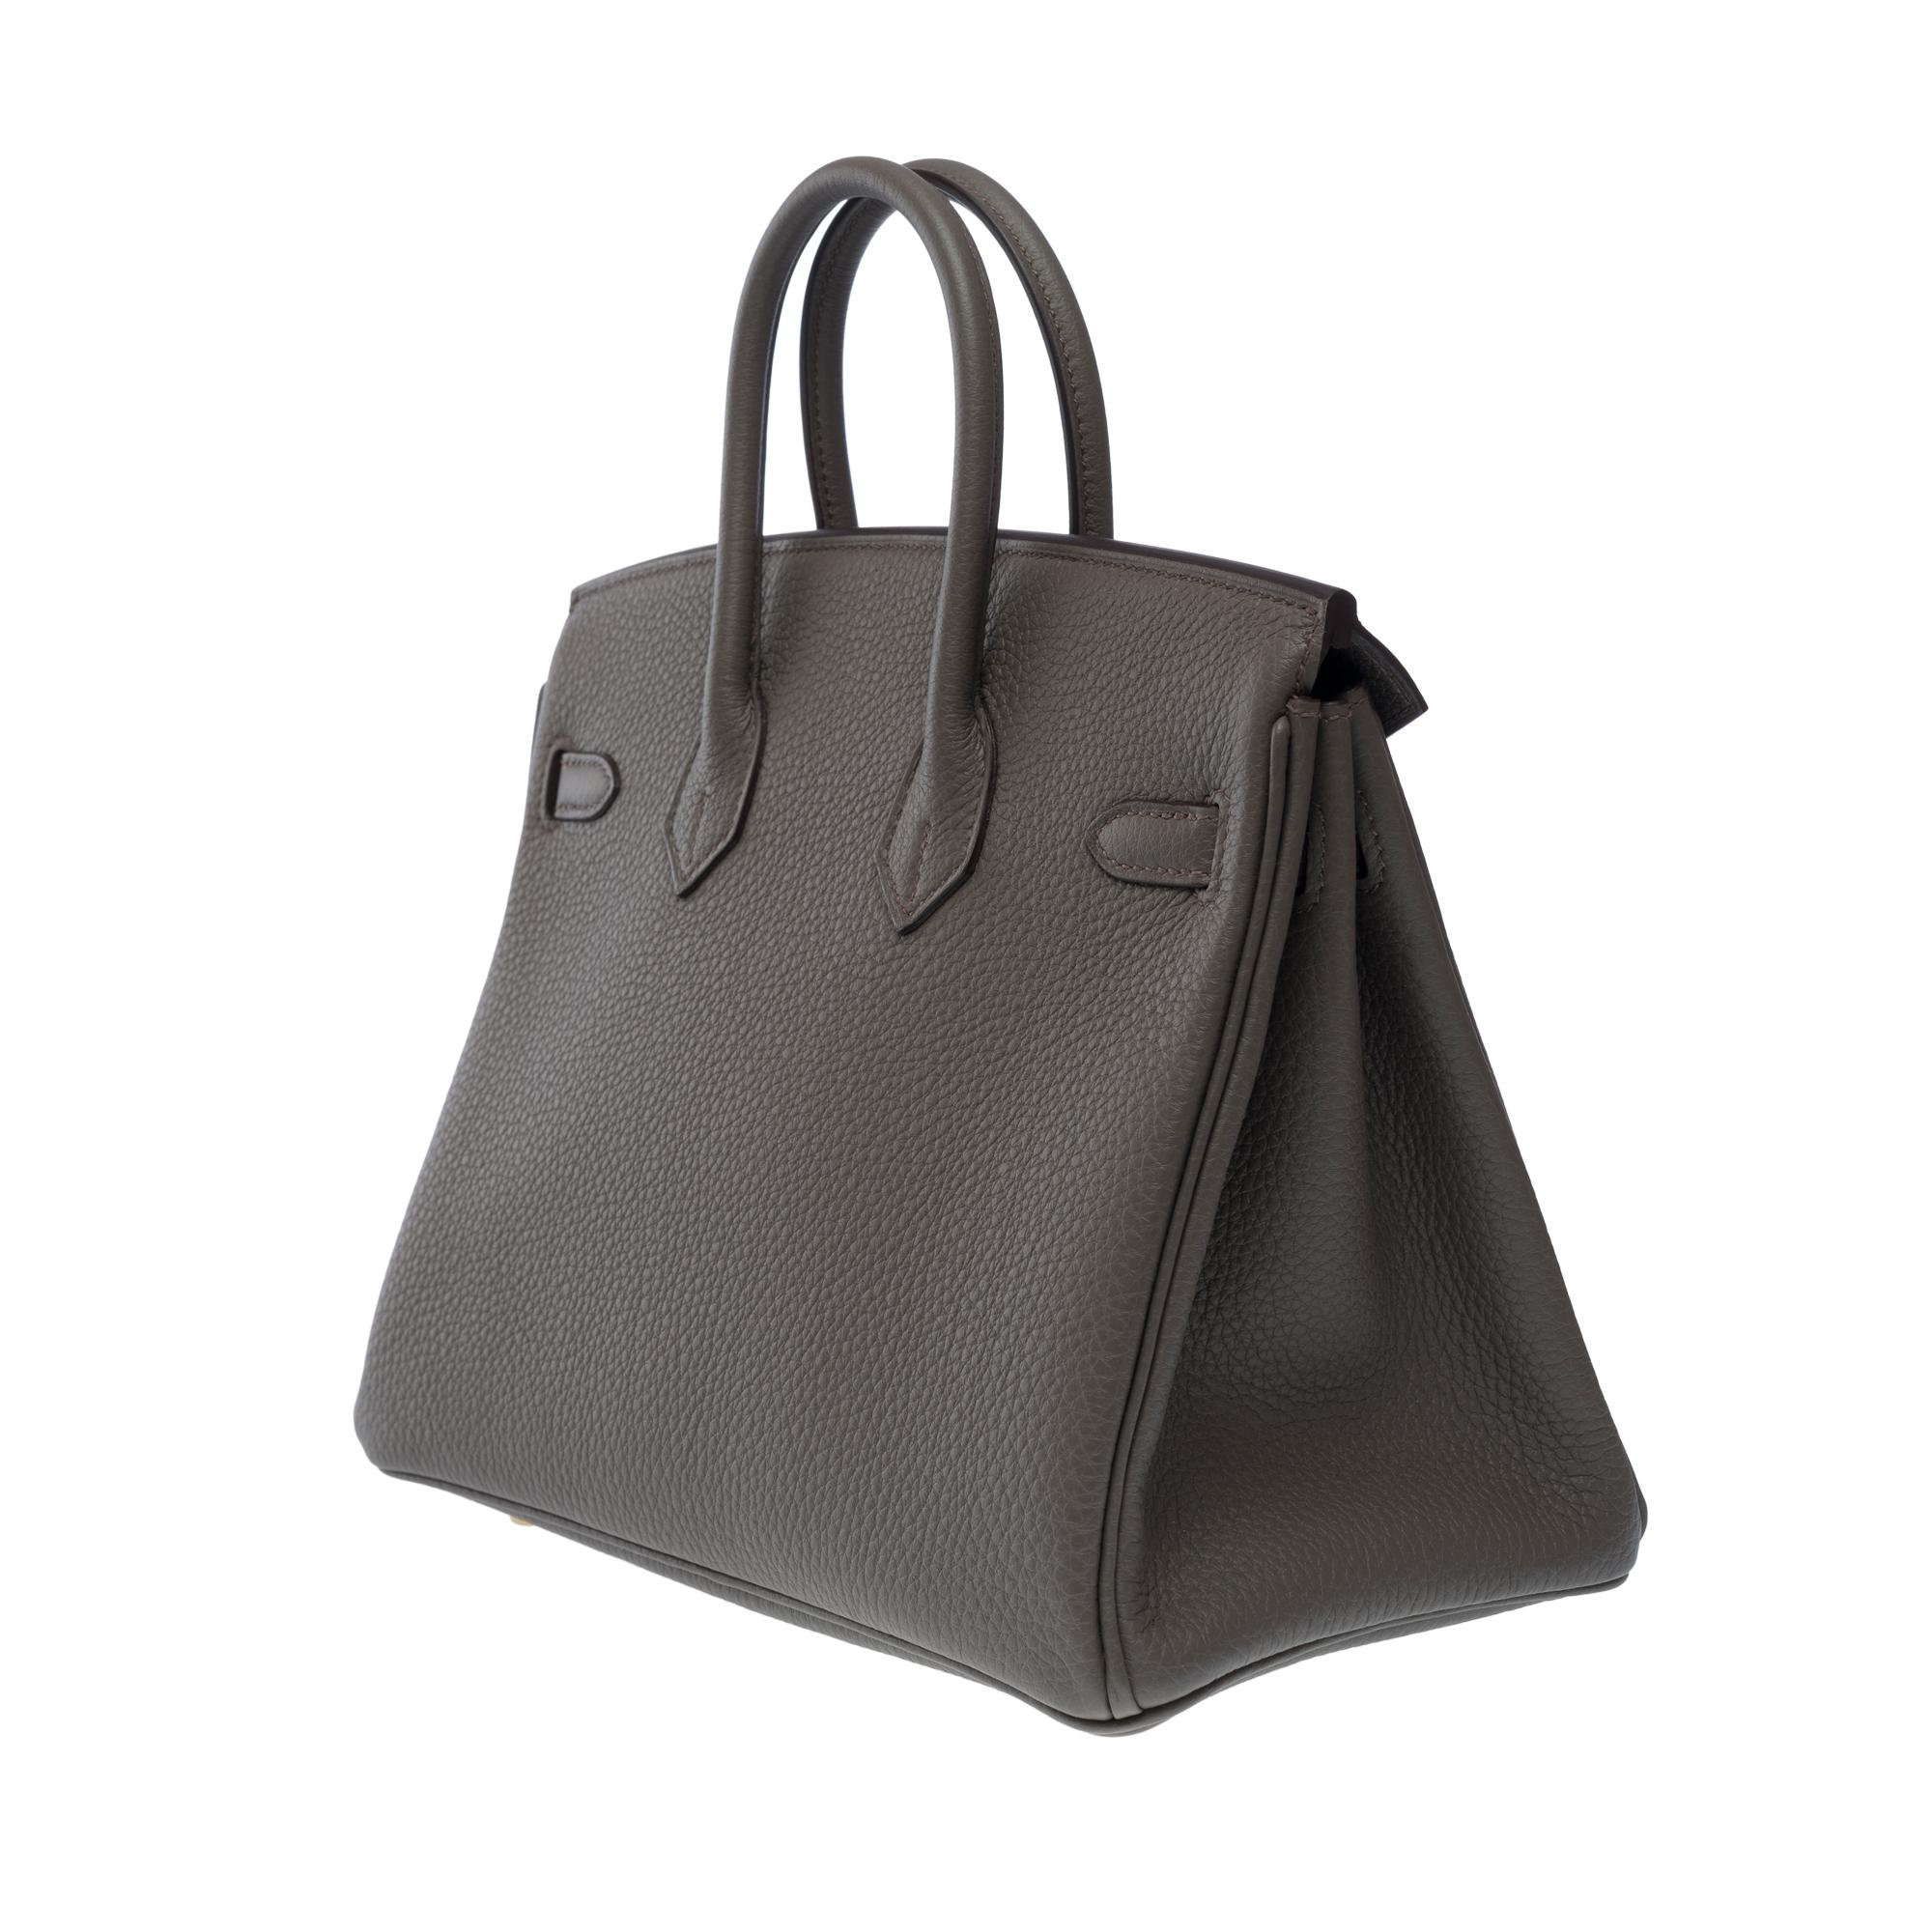 Fantastic New Hermes Birkin 25cm handbag in Etain Togo leather, GHW 1